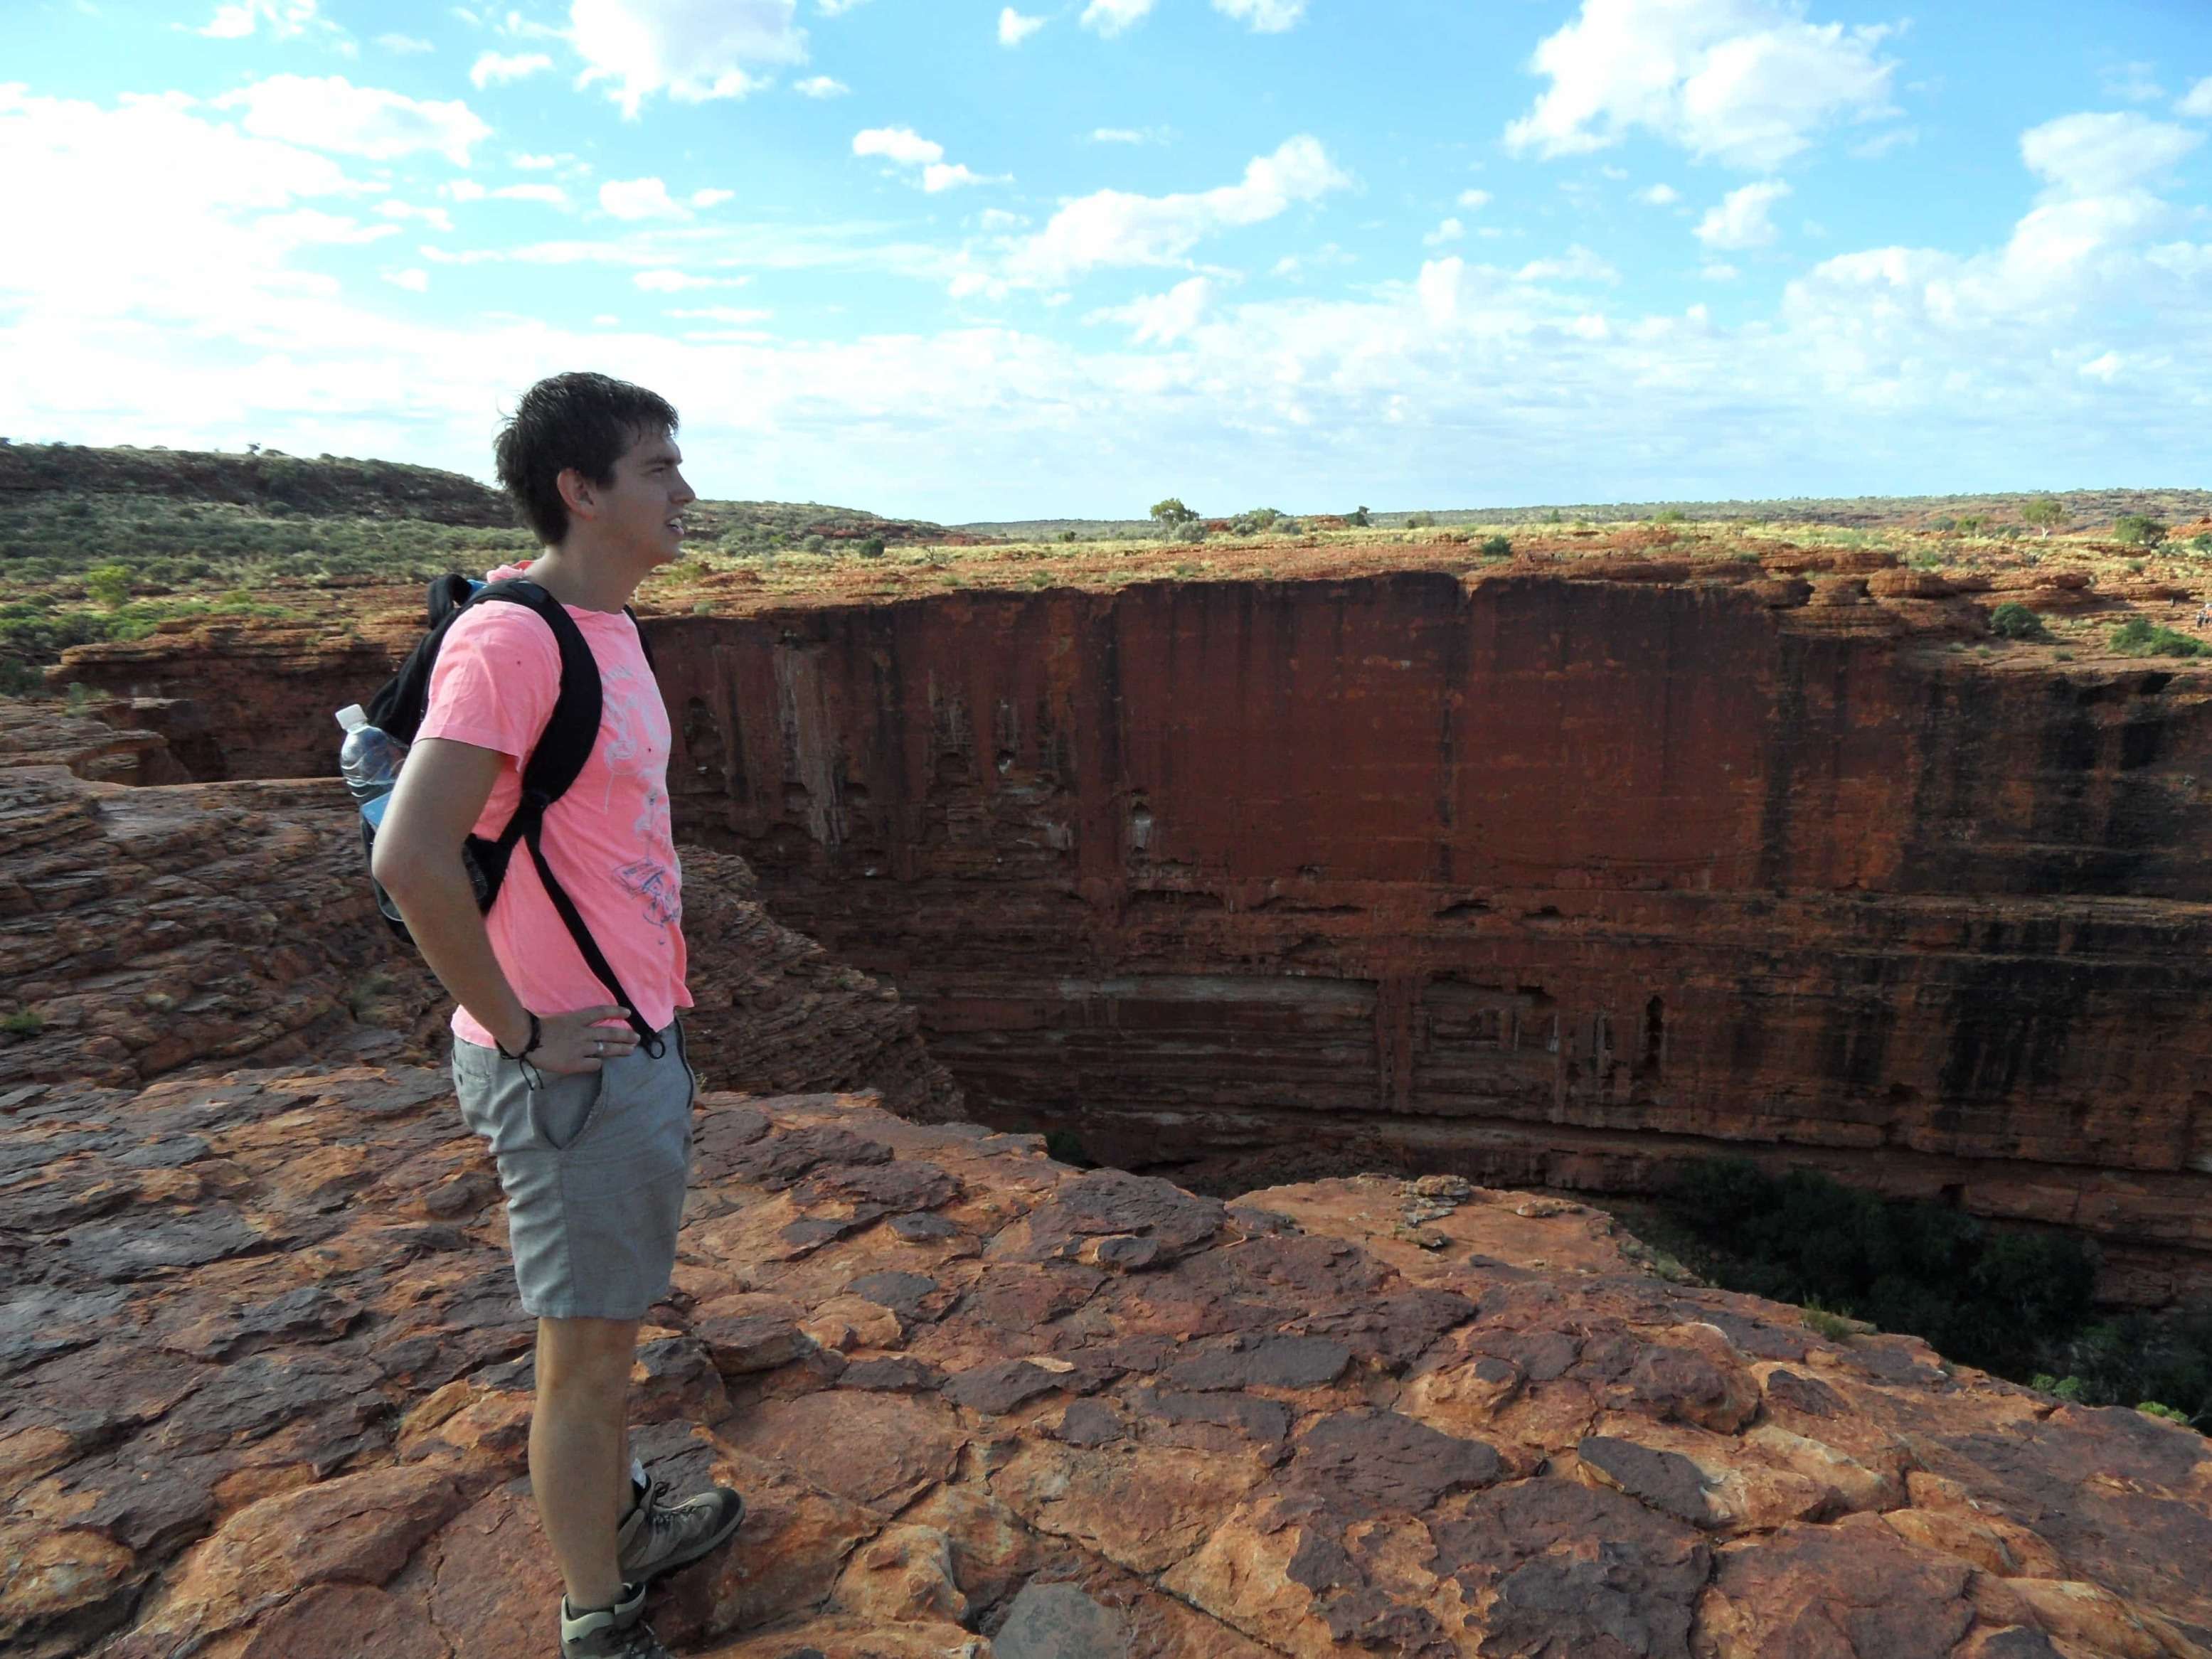 kings canyon, tip voor backpacken in australie